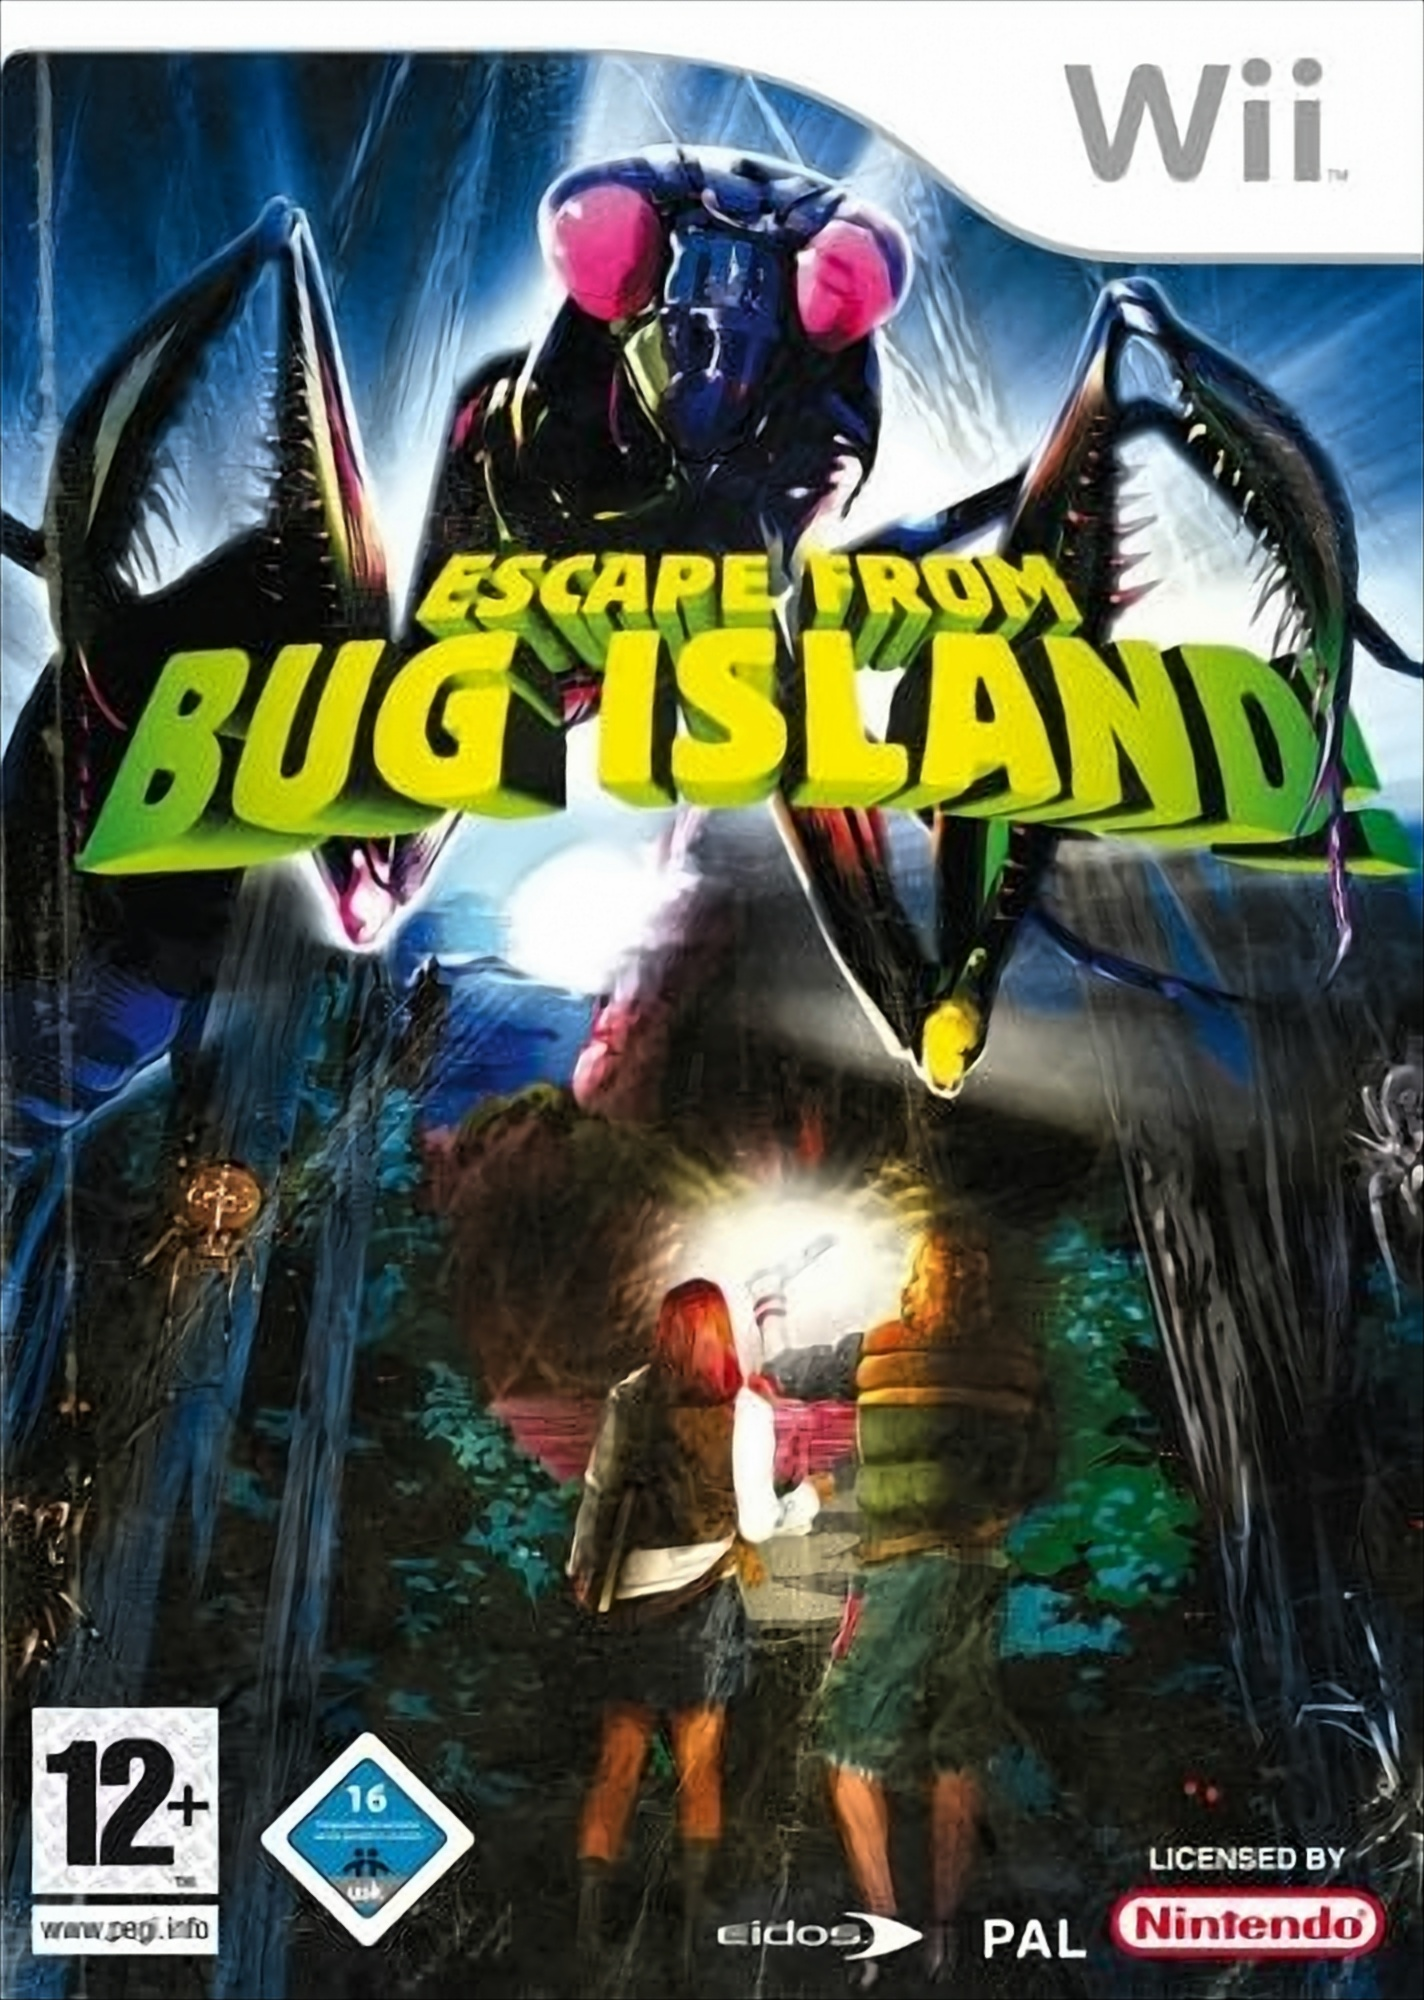 Wii] Escape Island Bug [Nintendo - from